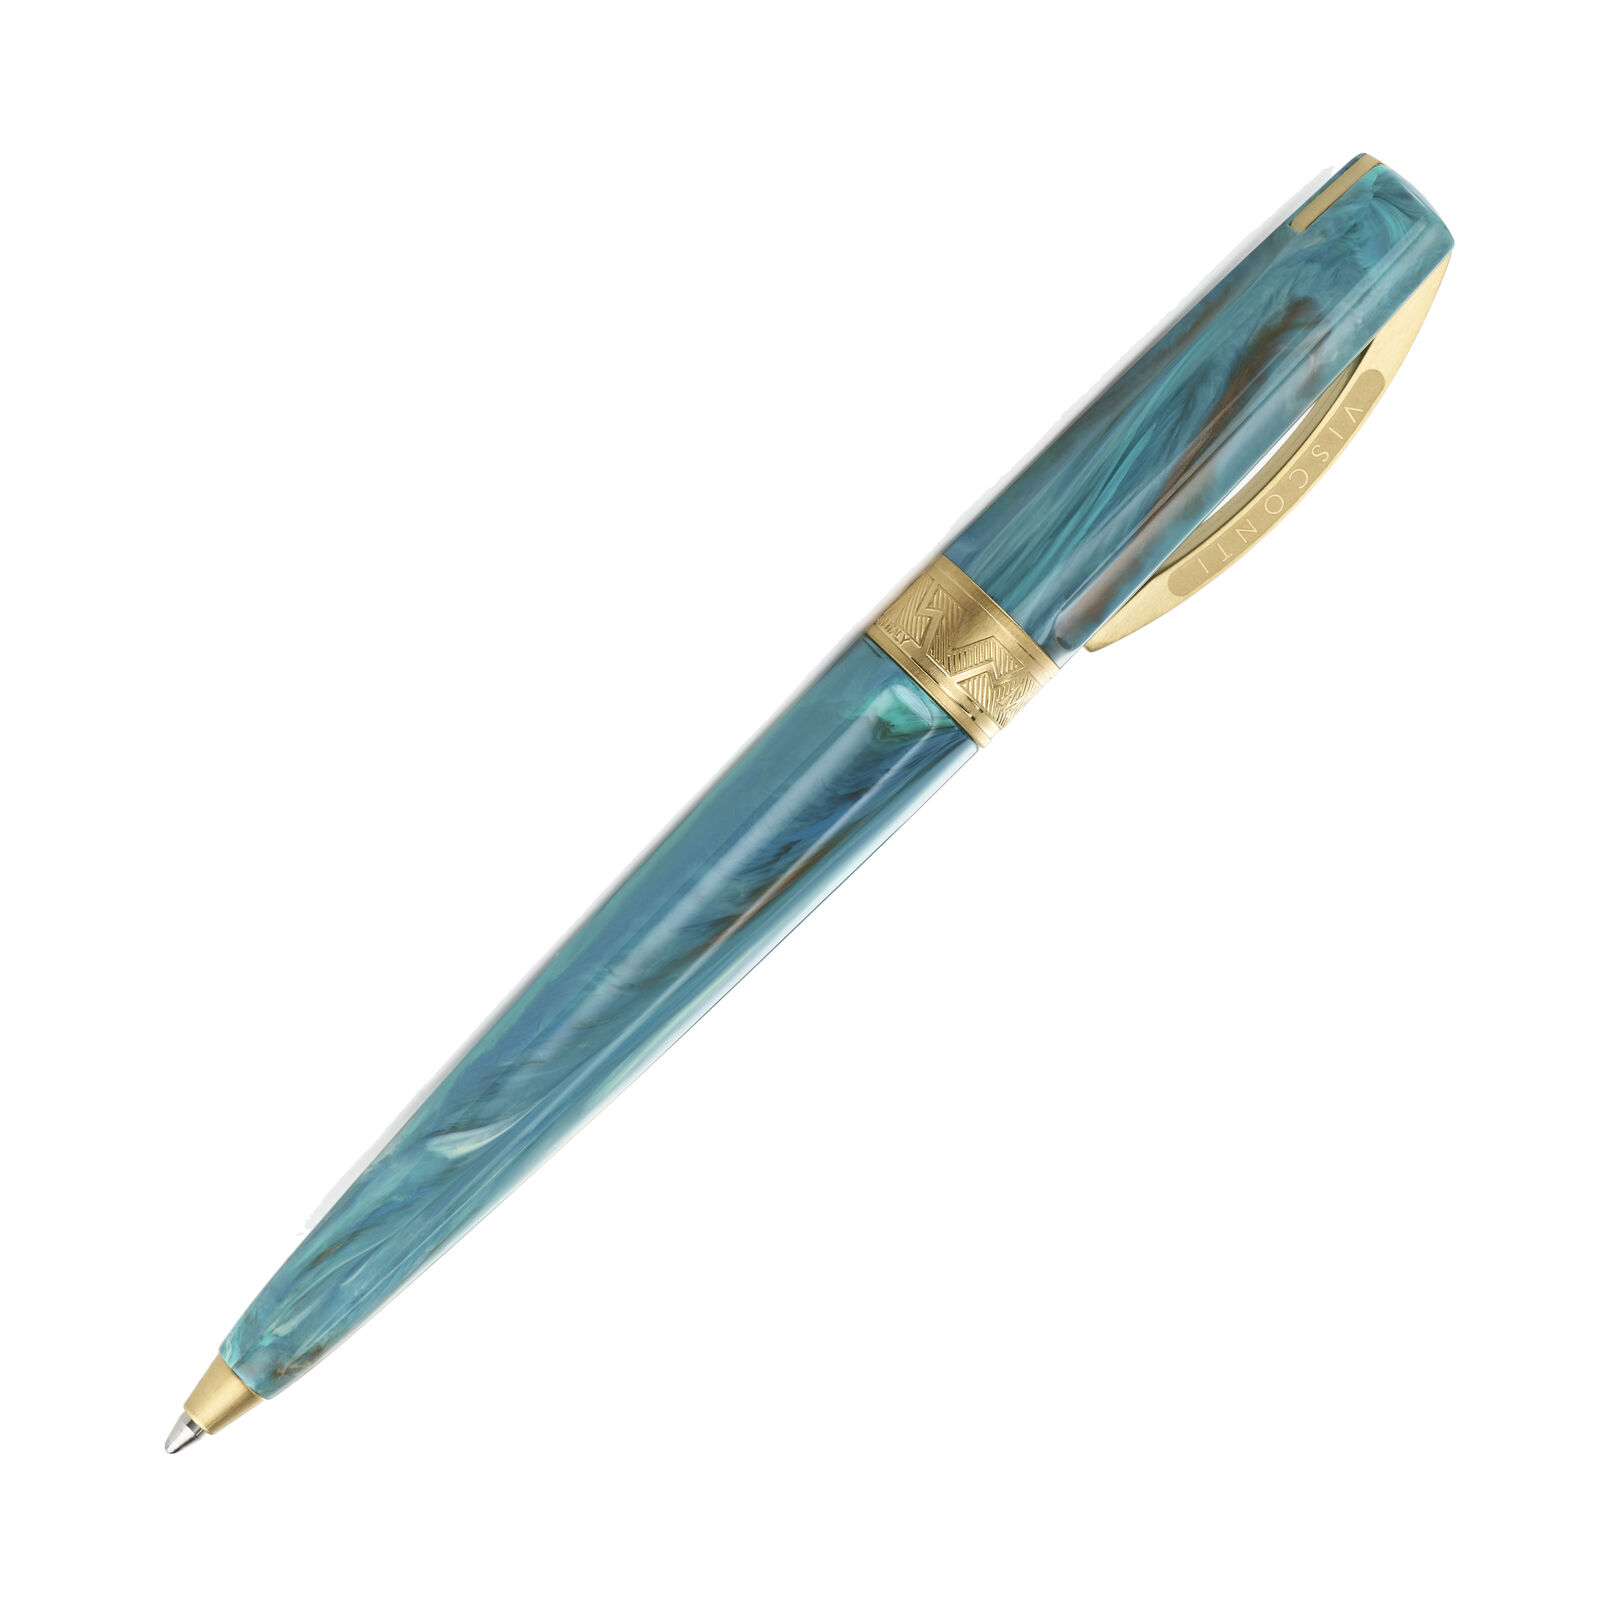 Visconti Mirage Mythos Ballpoint Pen in Athena - NEW in Original Box